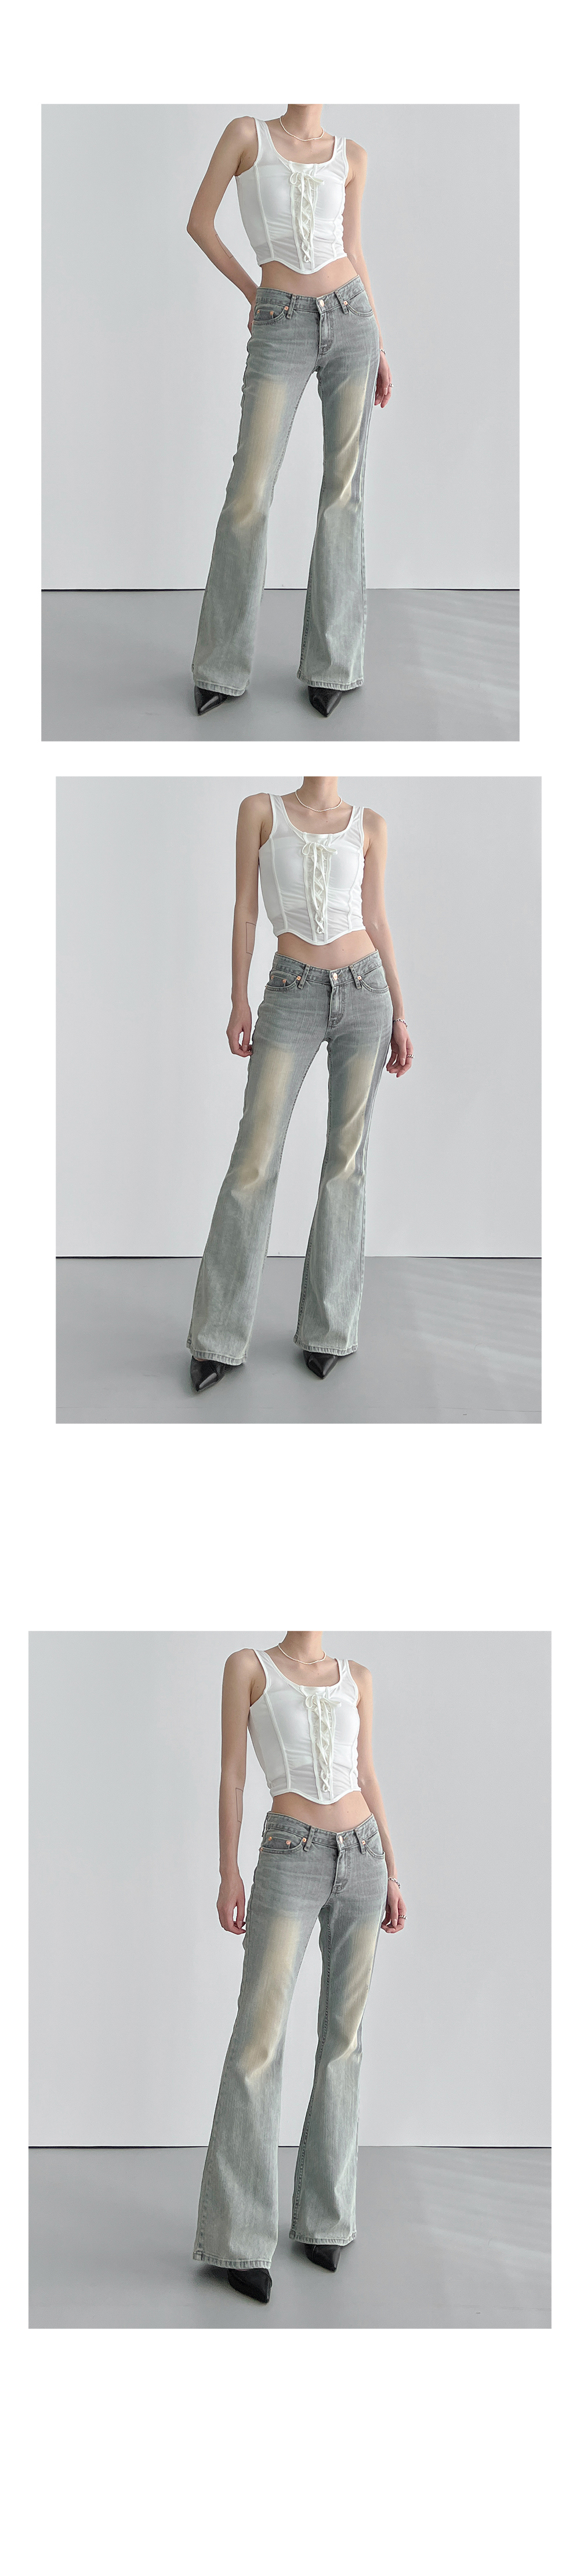 Pants model image-S3L4